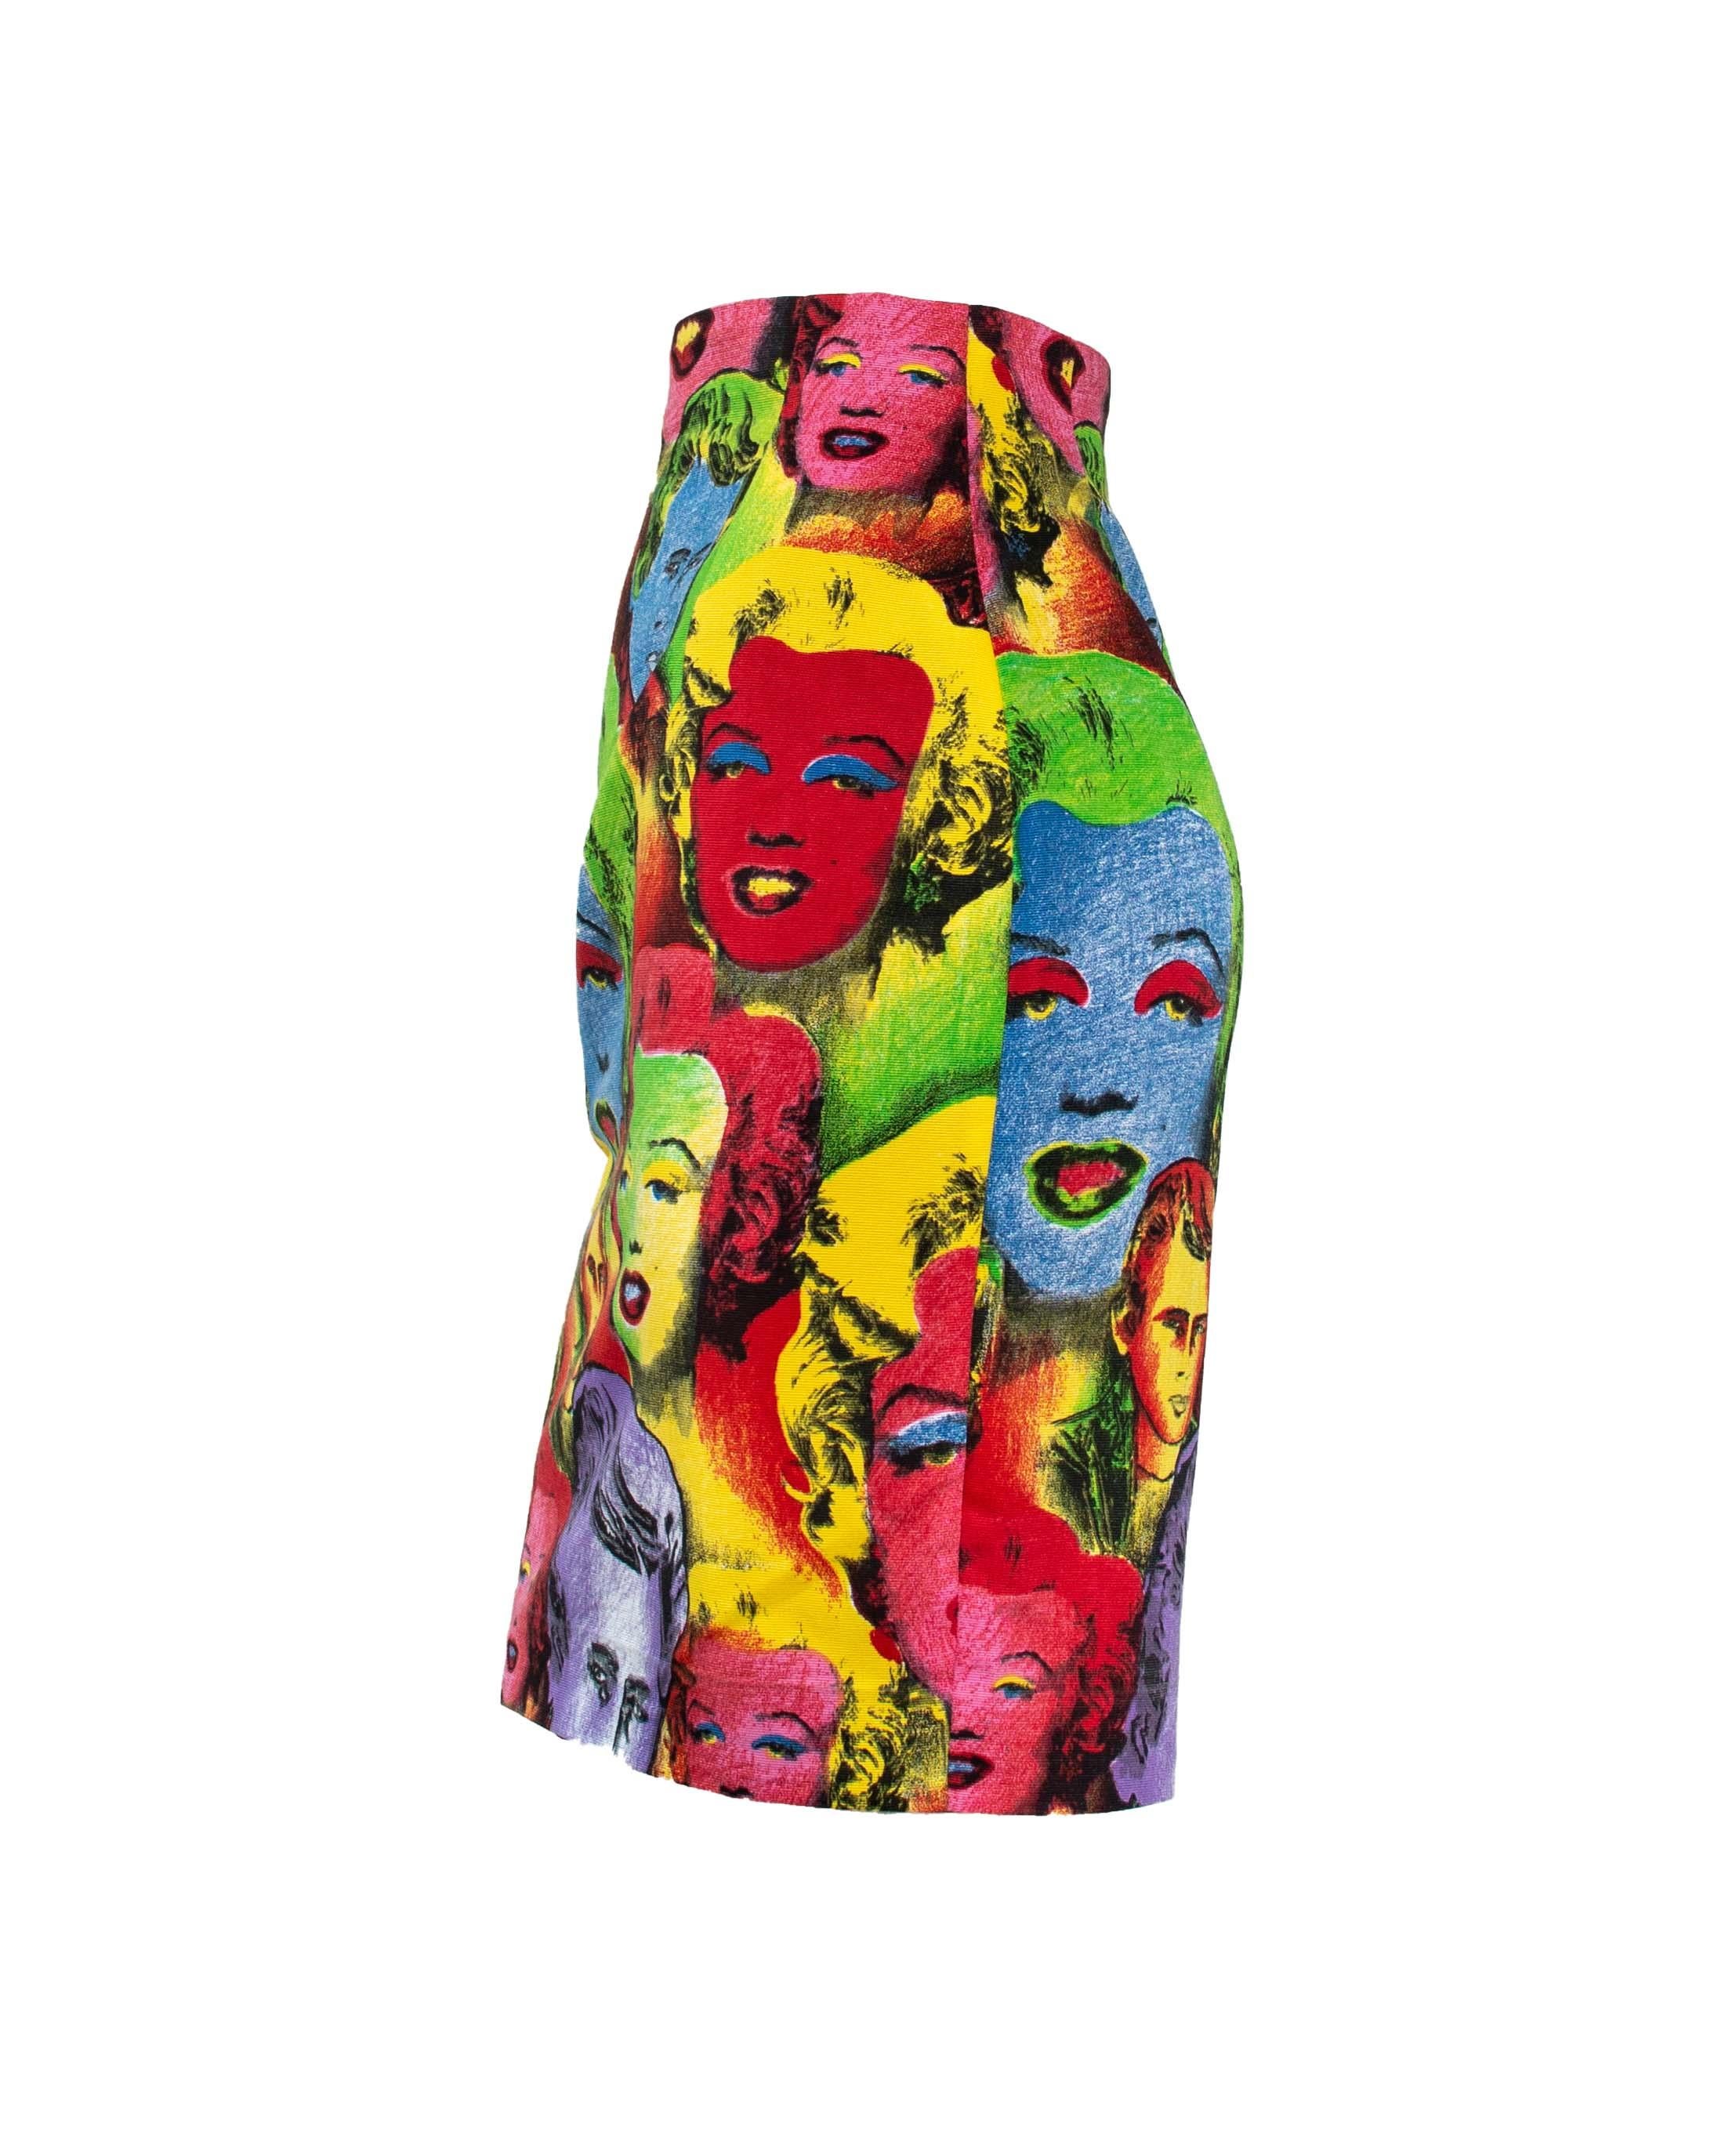 S/S 1991 Gianni Versace Marilyn Monroe Warhol Inspired Print Pop Art Skirt Suit For Sale 2